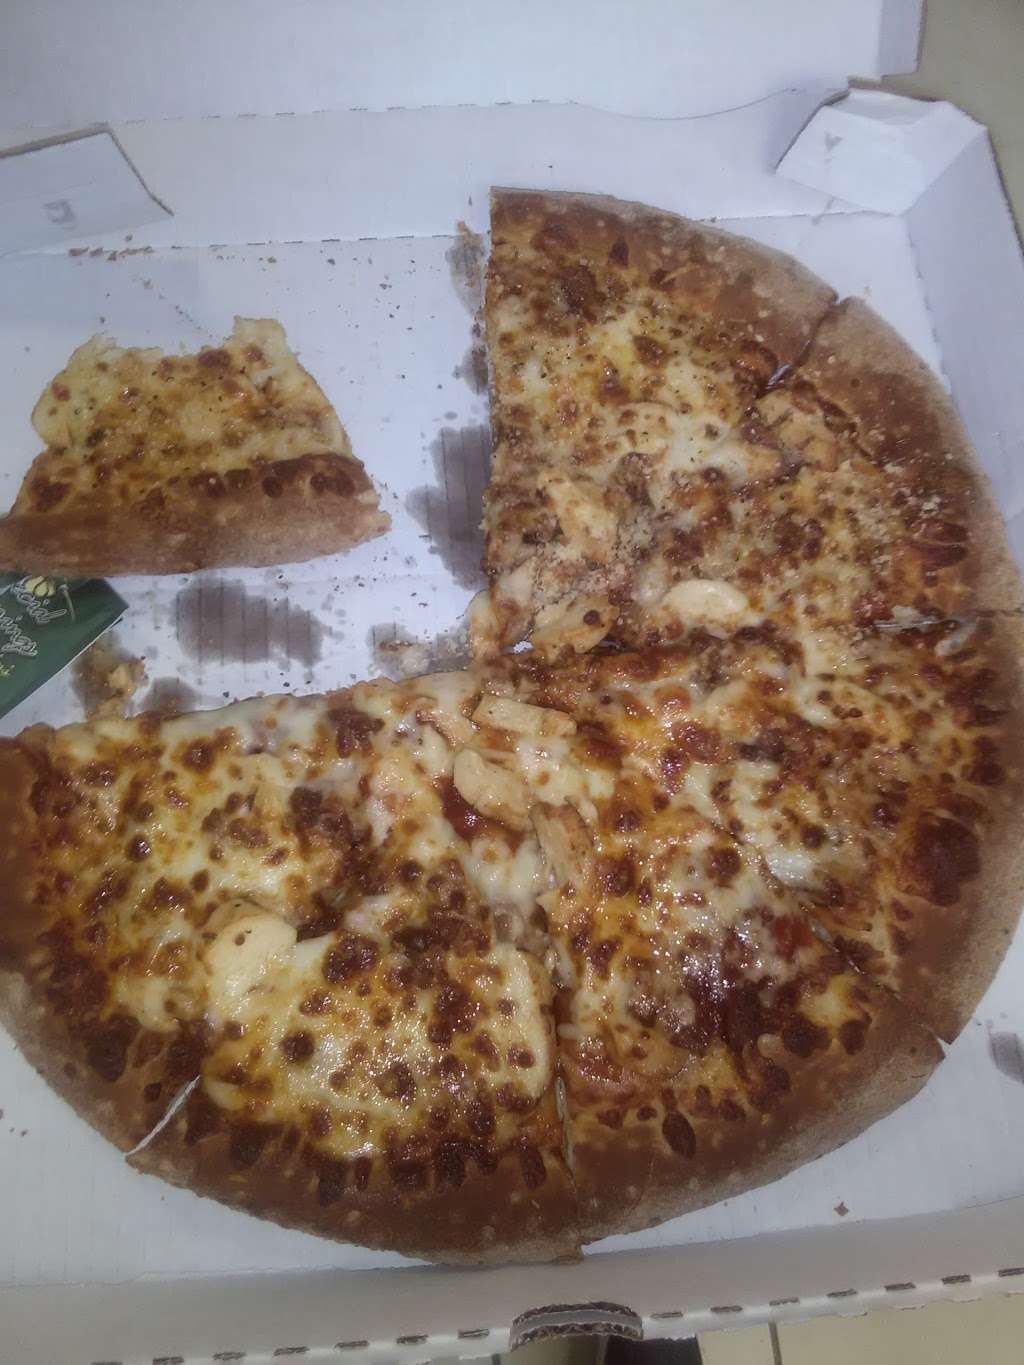 Papa Johns Pizza | 1420 W 11th St, Houston, TX 77008, USA | Phone: (713) 863-0099